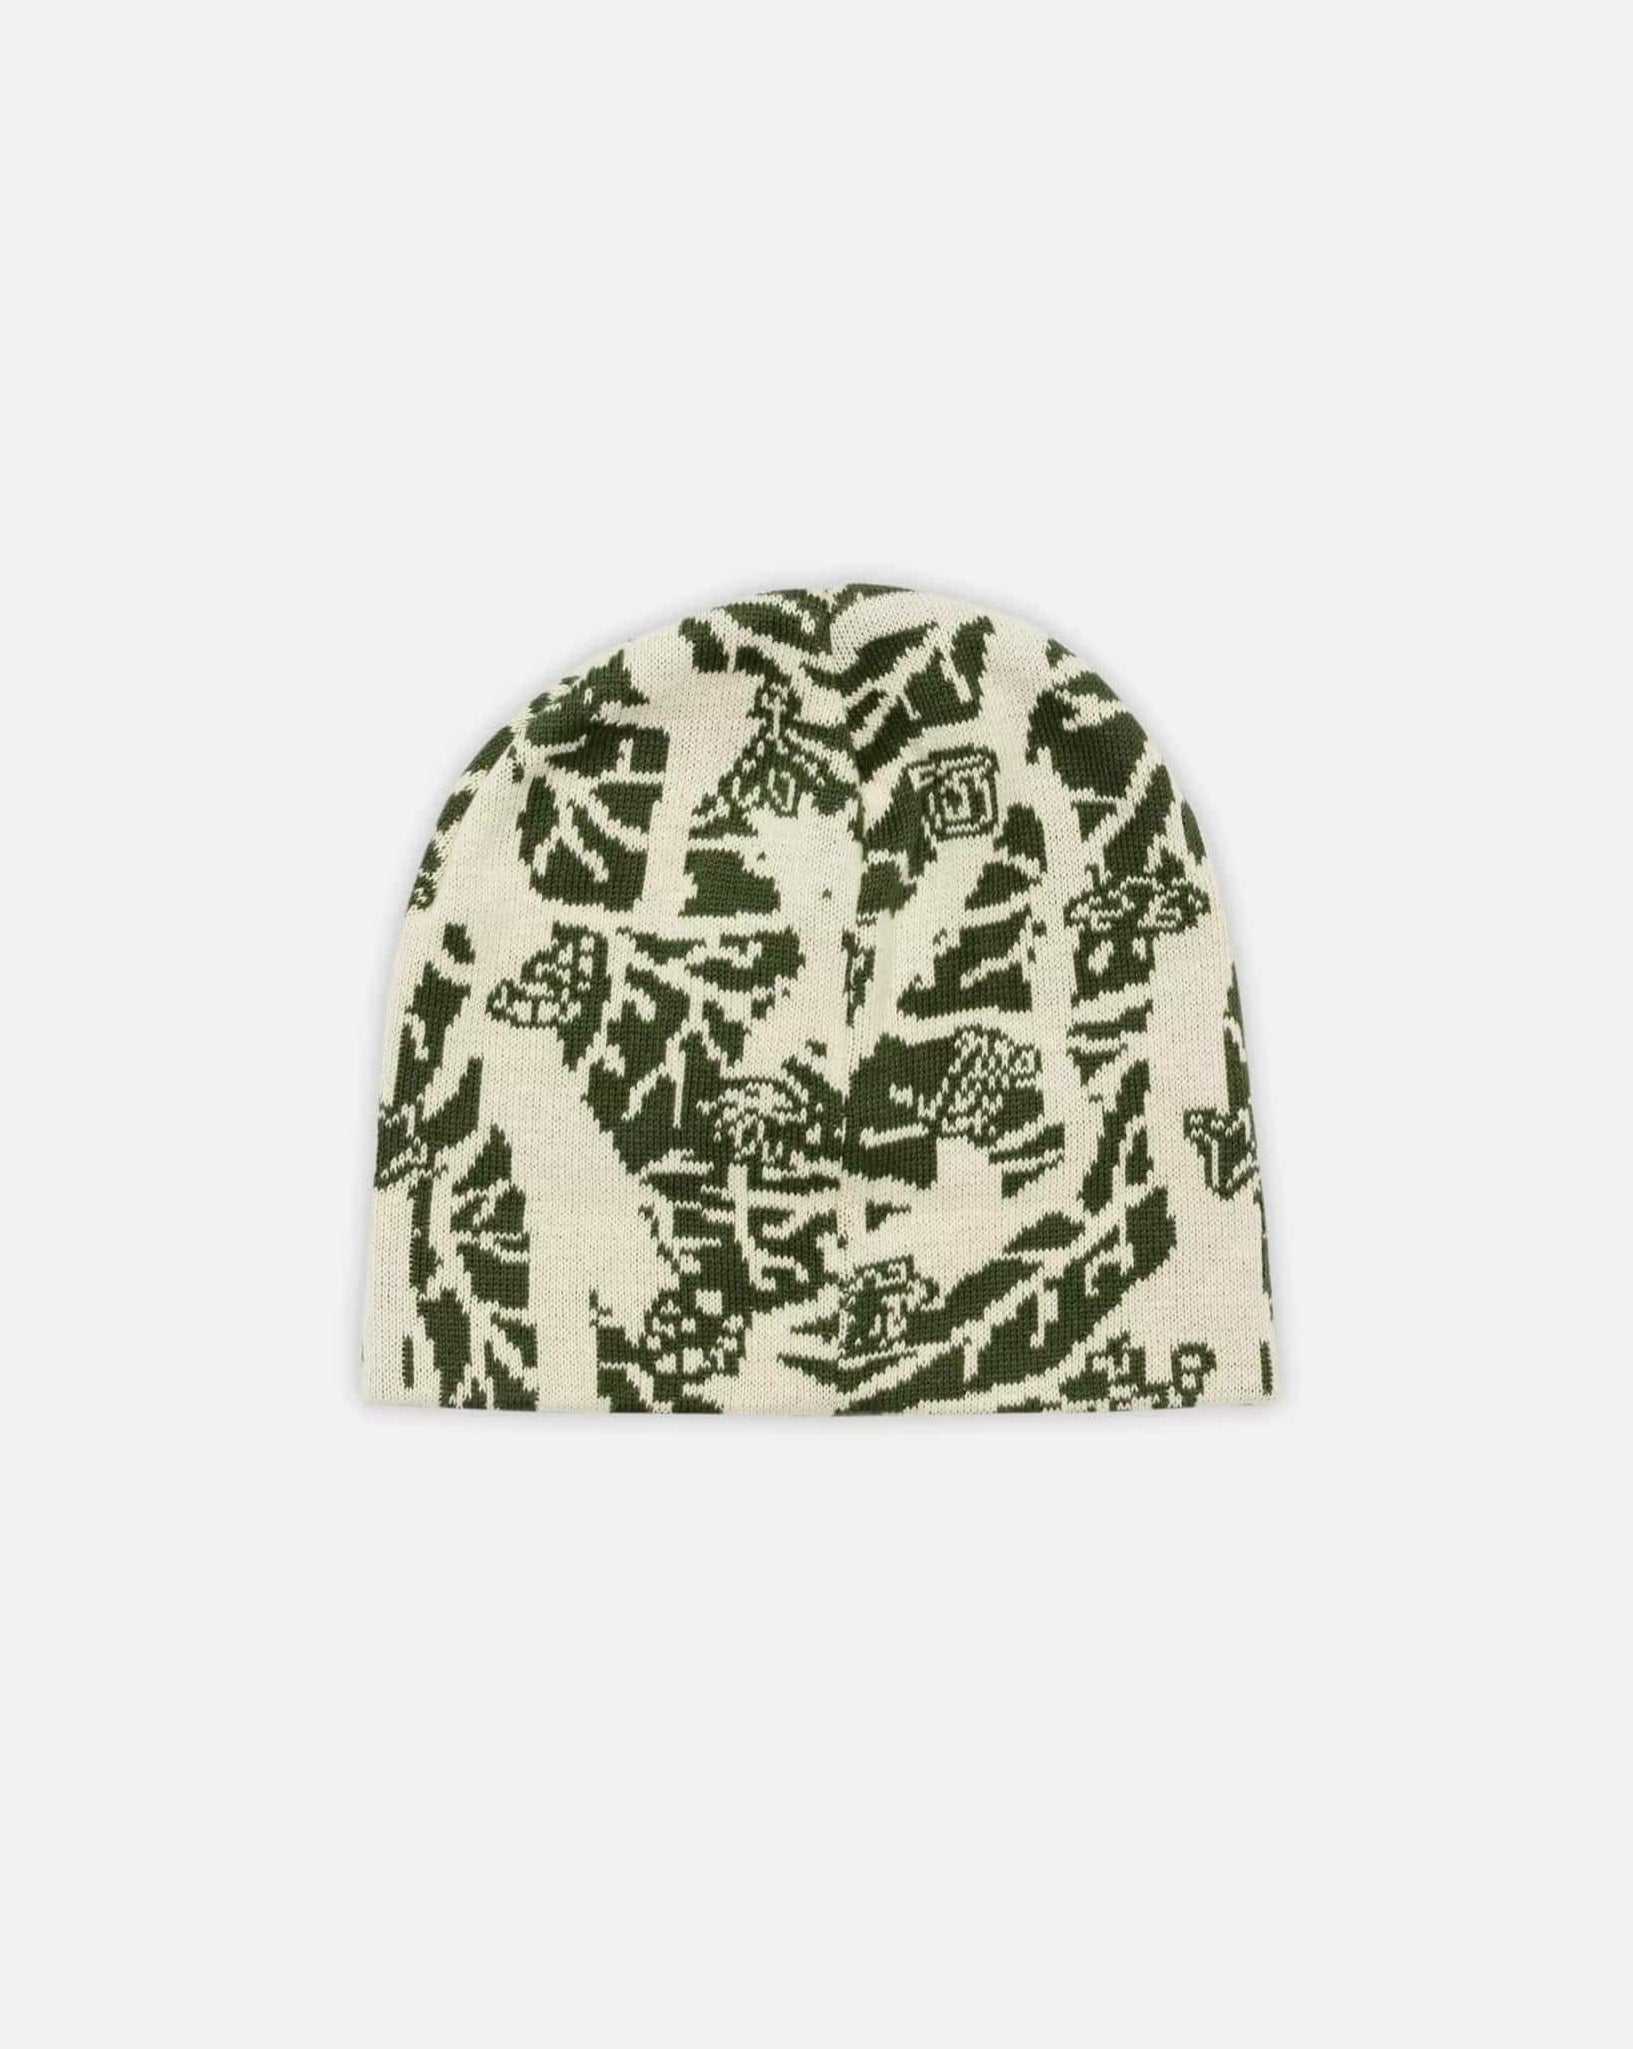 Louis Vuitton, Accessories, Camo Animal Print Hat